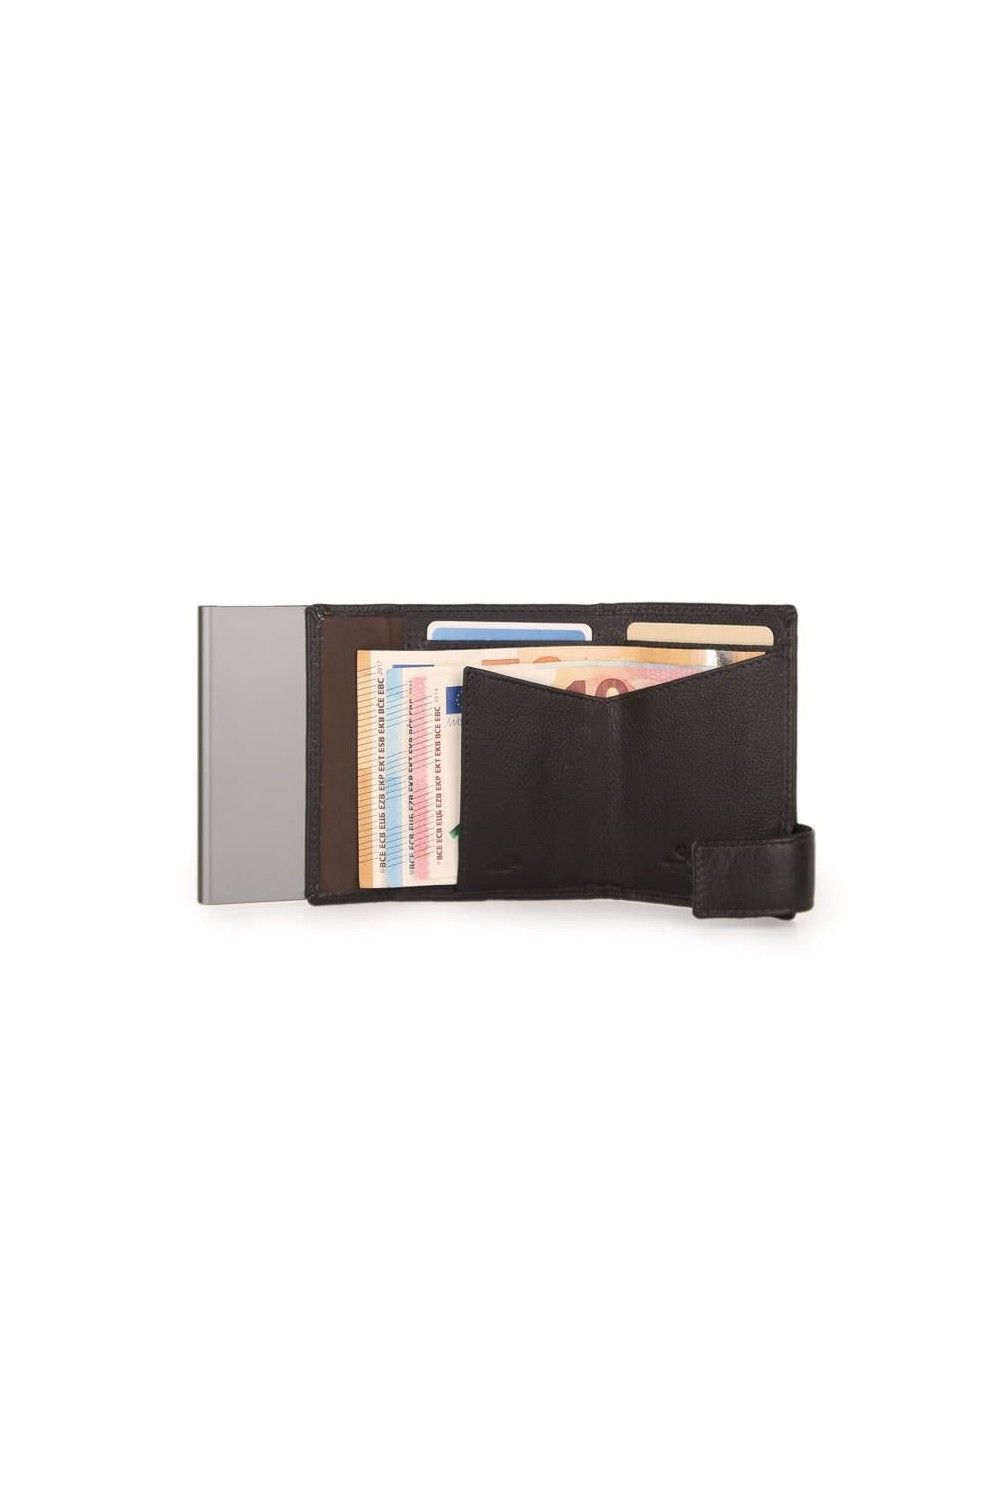 Porte-cartes SecWal RV Leather Brun fonce